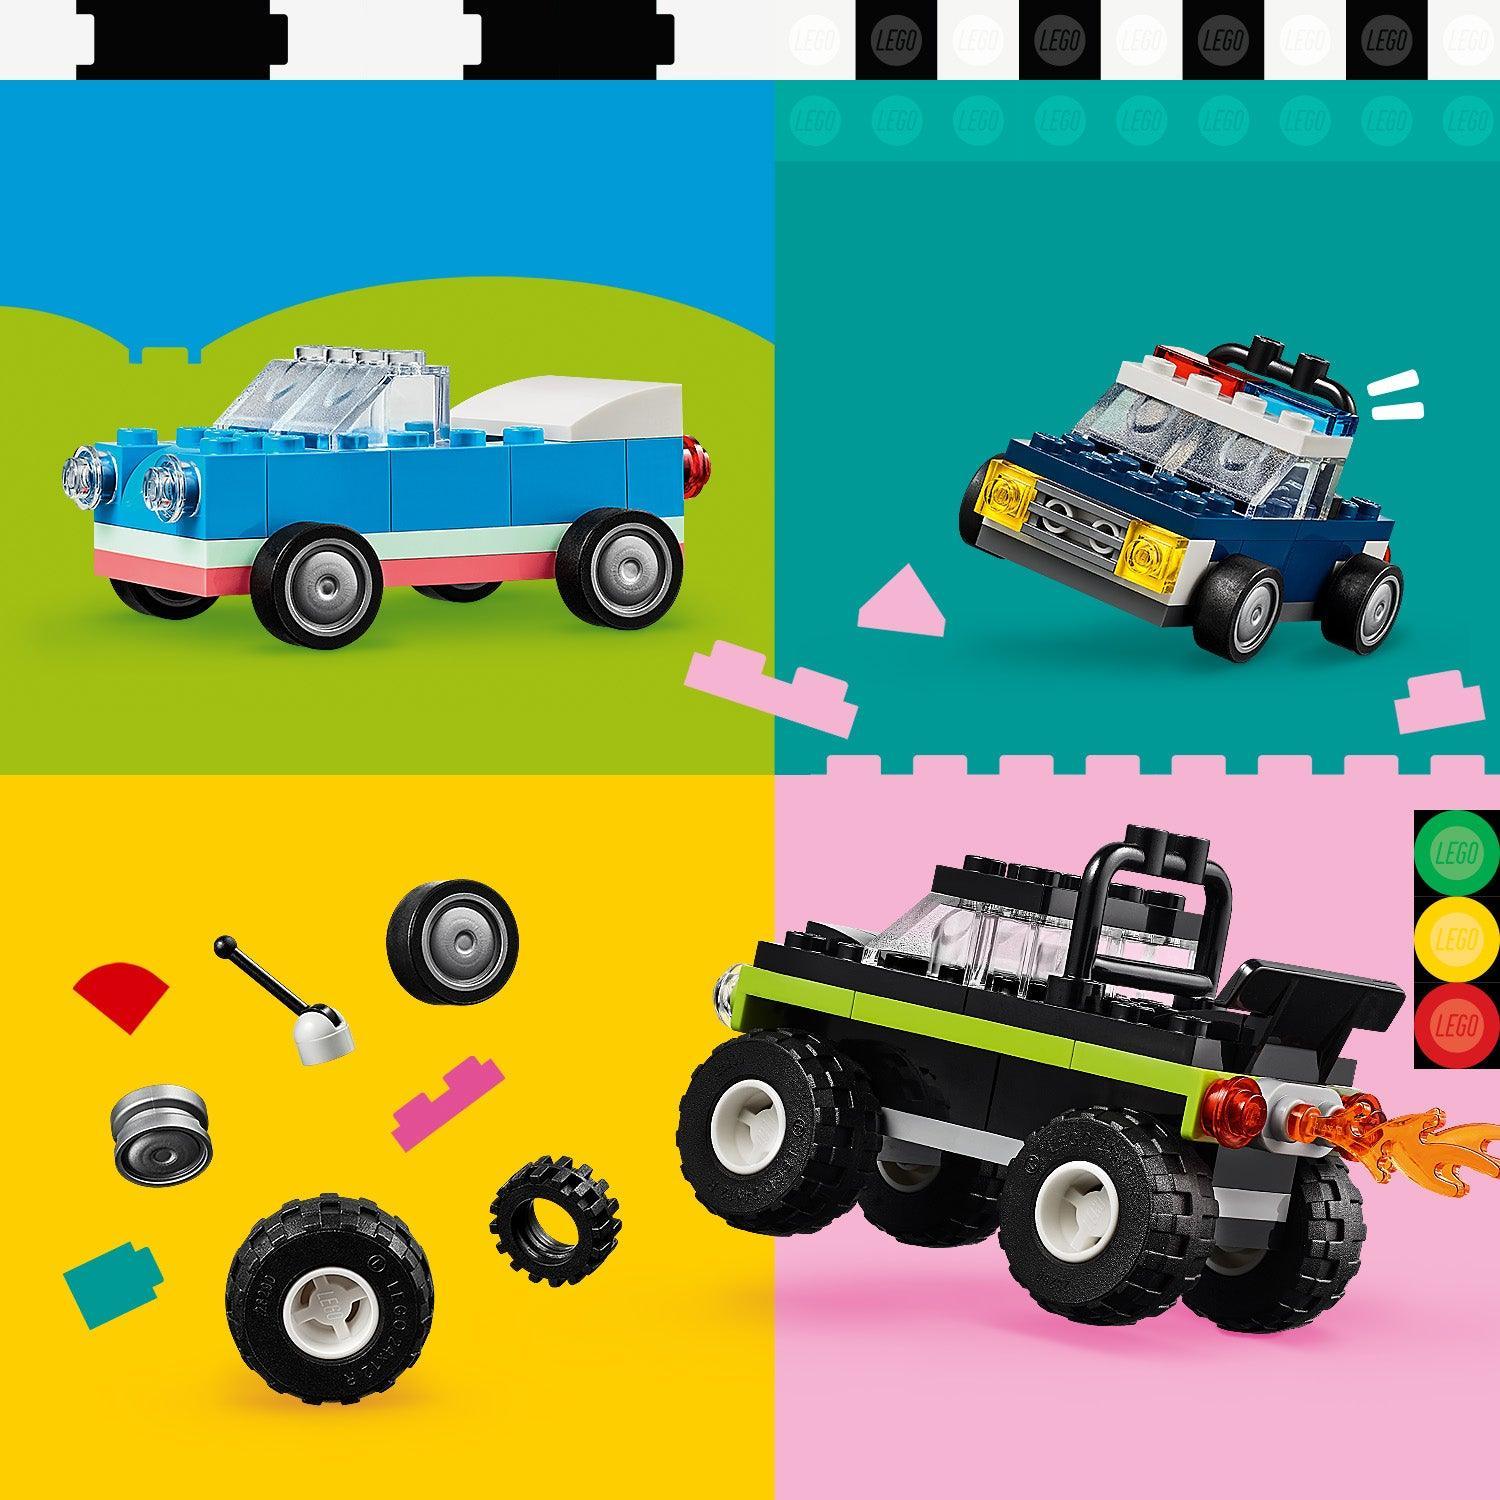 LEGO Creatieve voertuigen 11036 Classic | 2TTOYS ✓ Official shop<br>